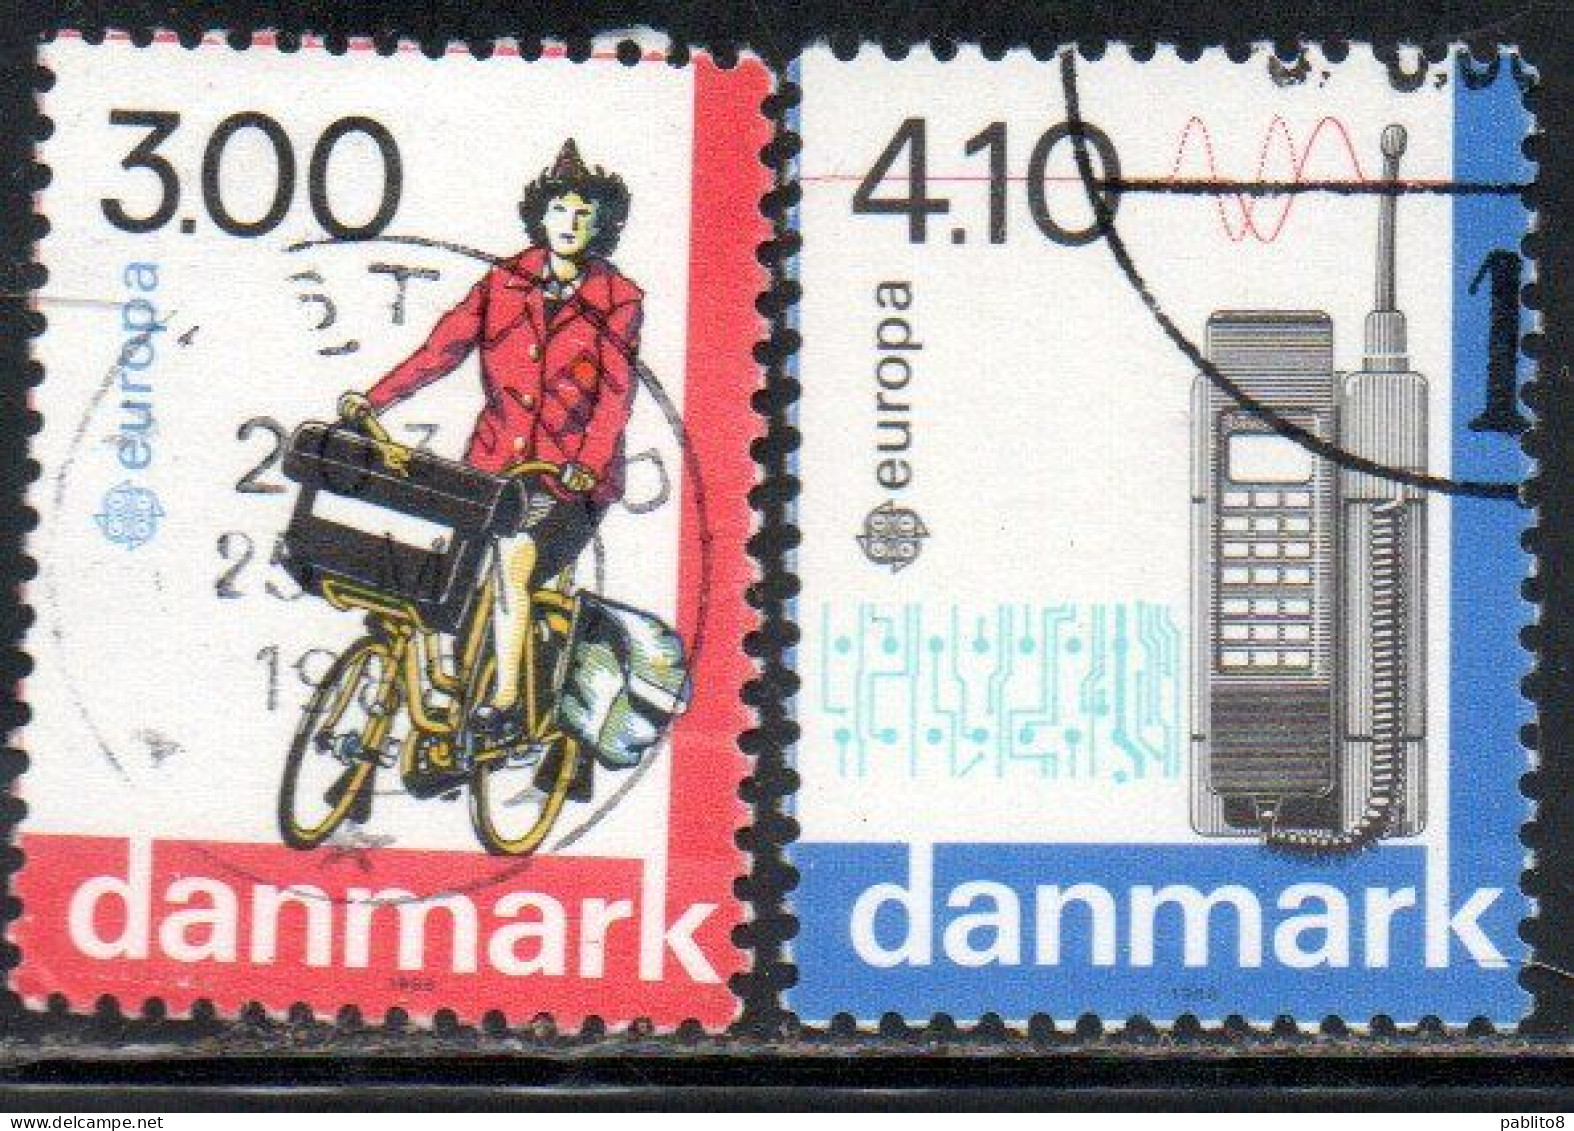 DANEMARK DANMARK DENMARK DANIMARCA 1988 EUROPA CEPT TRANSPORT AND COMMUNICATION COMPLETE SET SERIE USED USATO OBLITERE' - Used Stamps